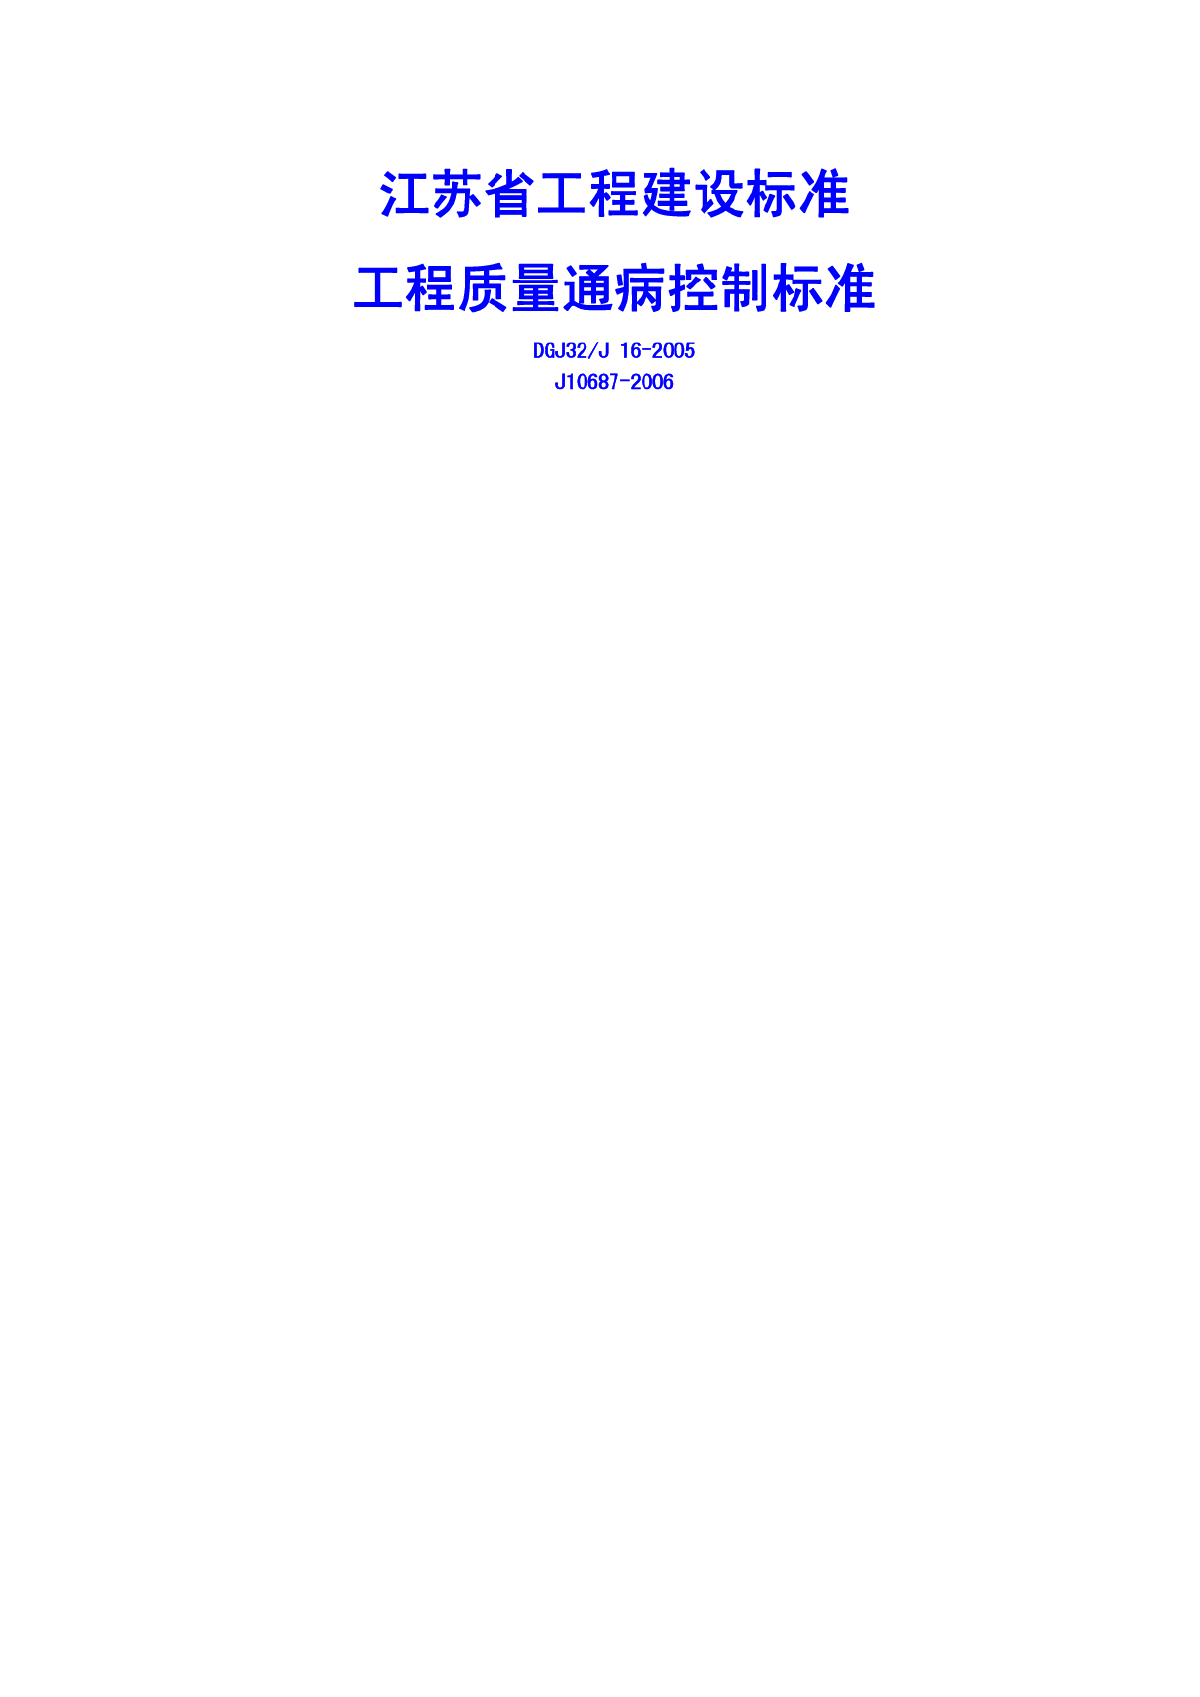 DGJ32／J16-2005 江苏省住宅工程质量通病控制标准.pdf